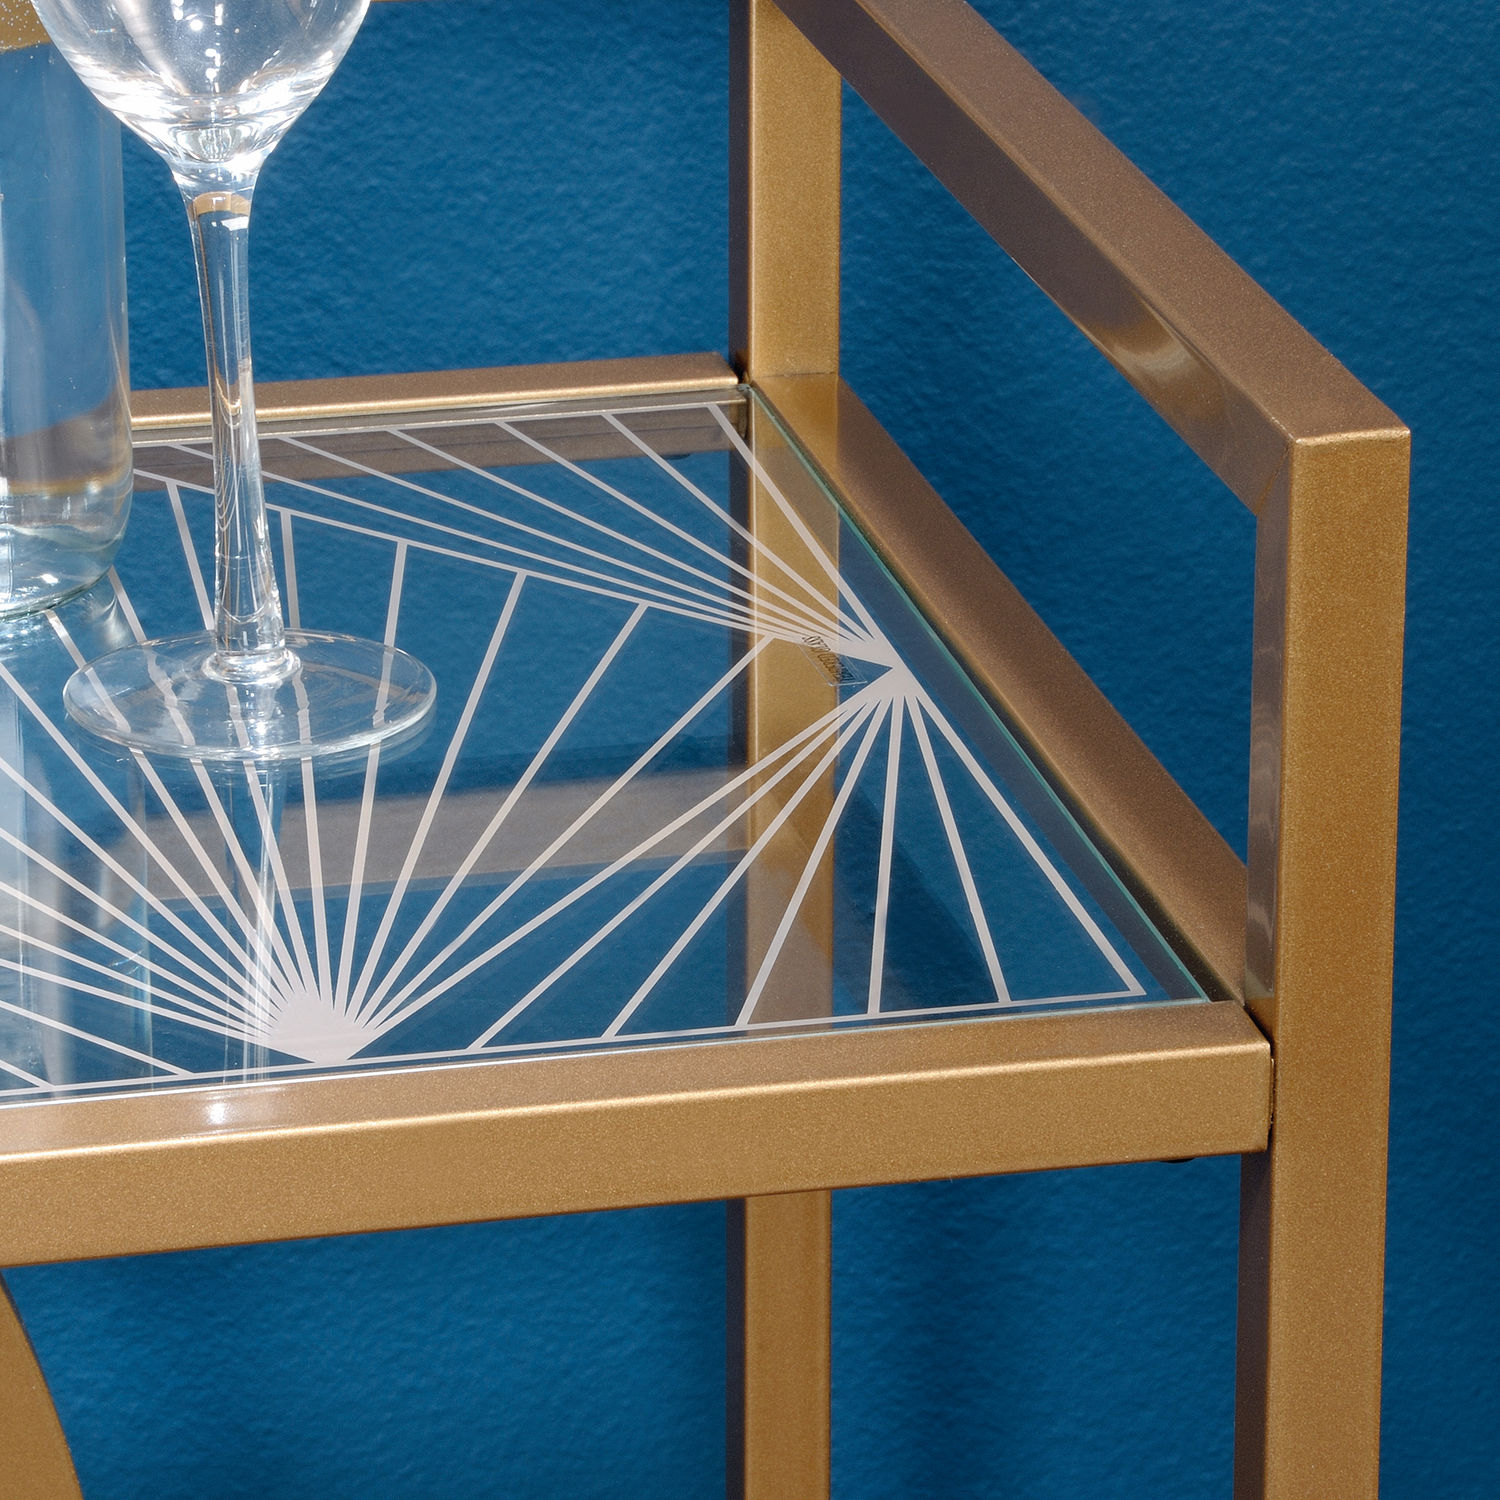 Better Homes & Gardens Nola Mid-Century Metal & Glass Bar Cart, Gold Finish